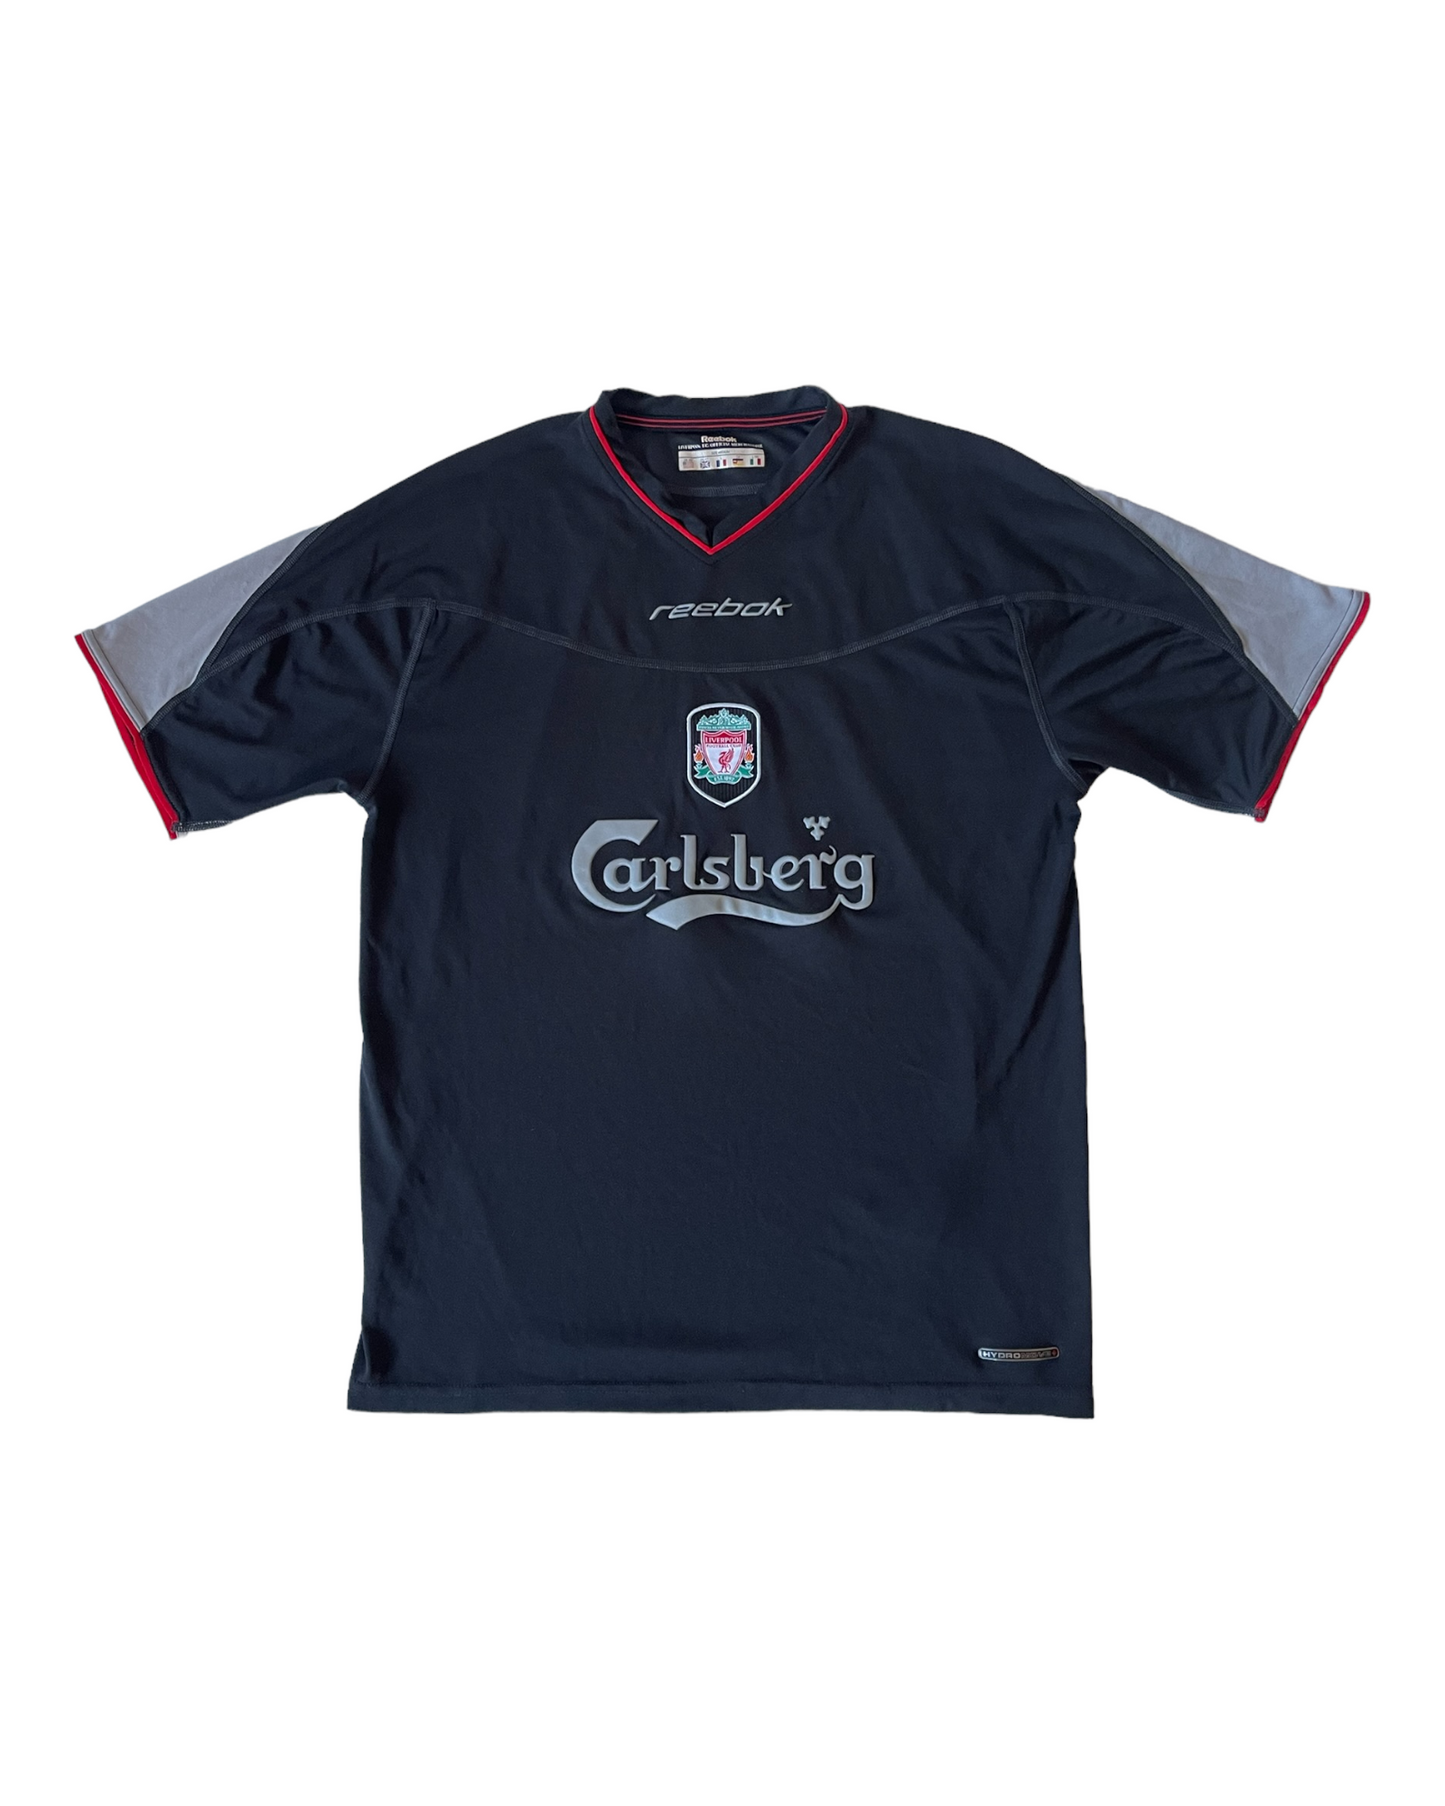 Liverpool Reebok 2002-2003 Away Football Shirt Carlsberg Black Size XL HidroMove